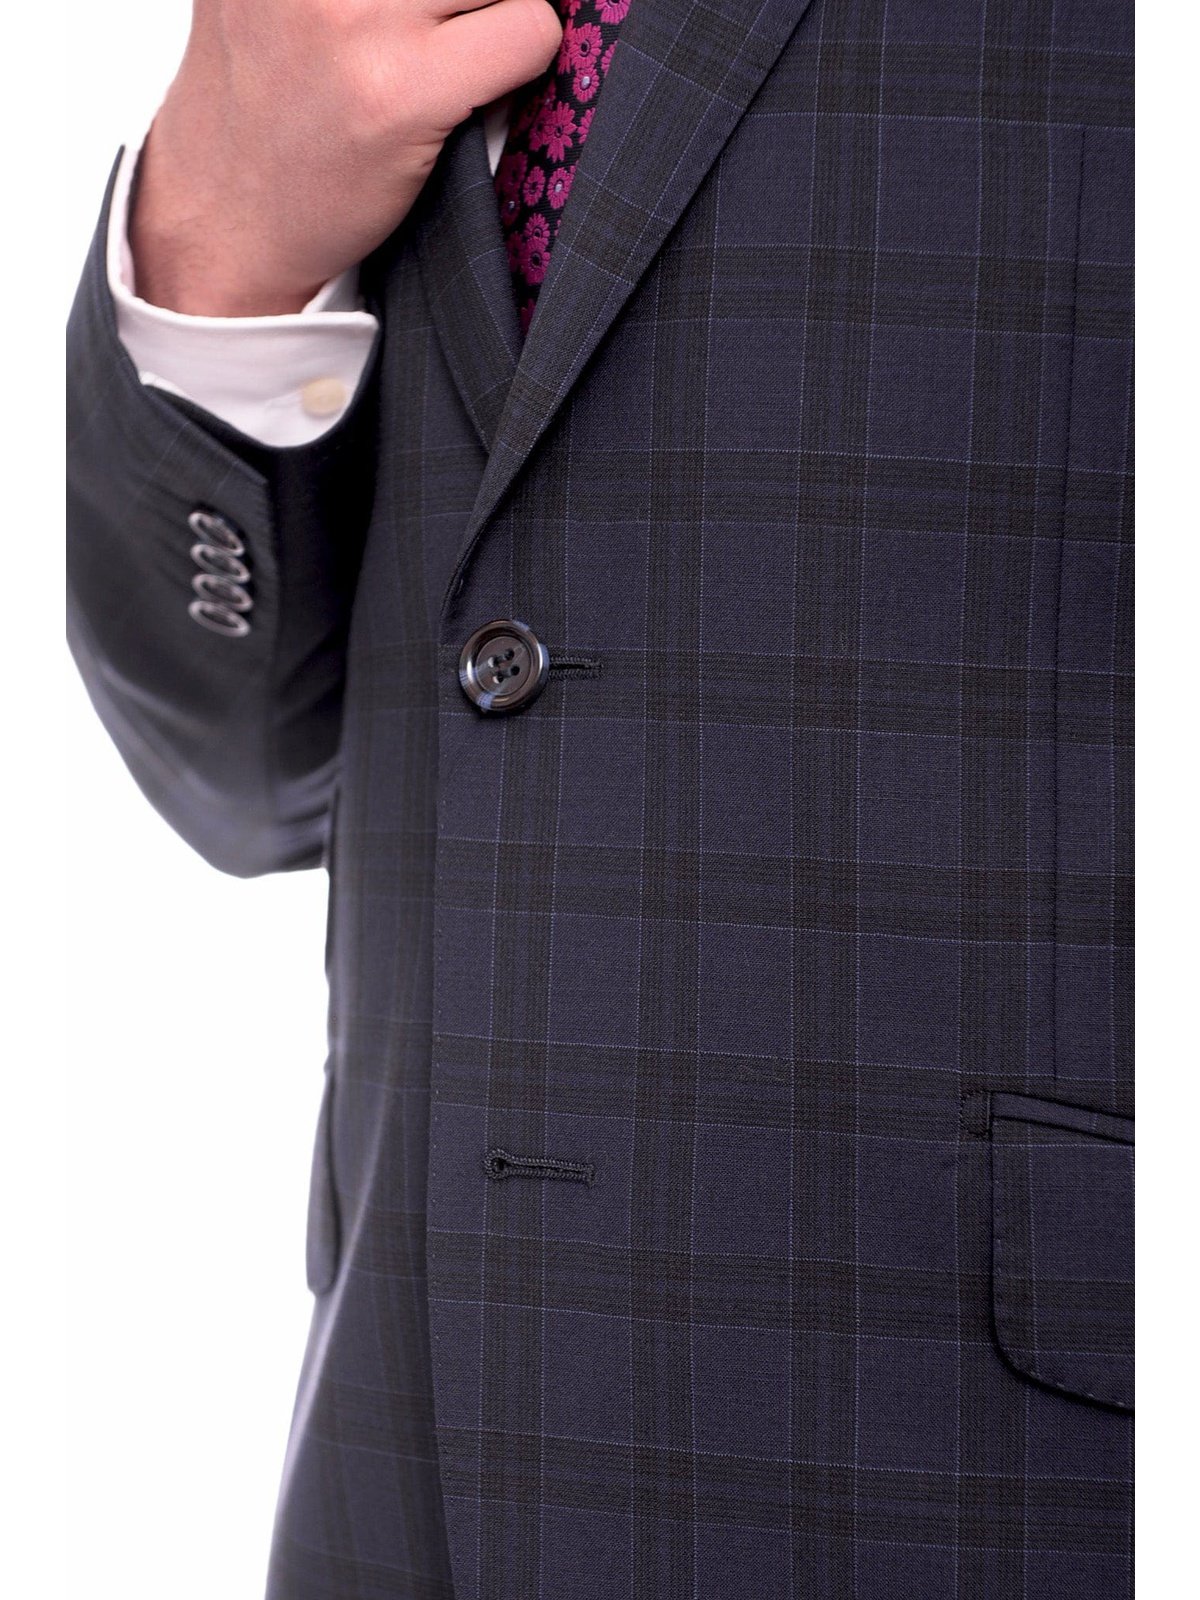 Napoli TWO PIECE SUITS Men's Napoli Classic Fit Blue Windowpane Plaid Super 150s 100% Italian Wool Suit